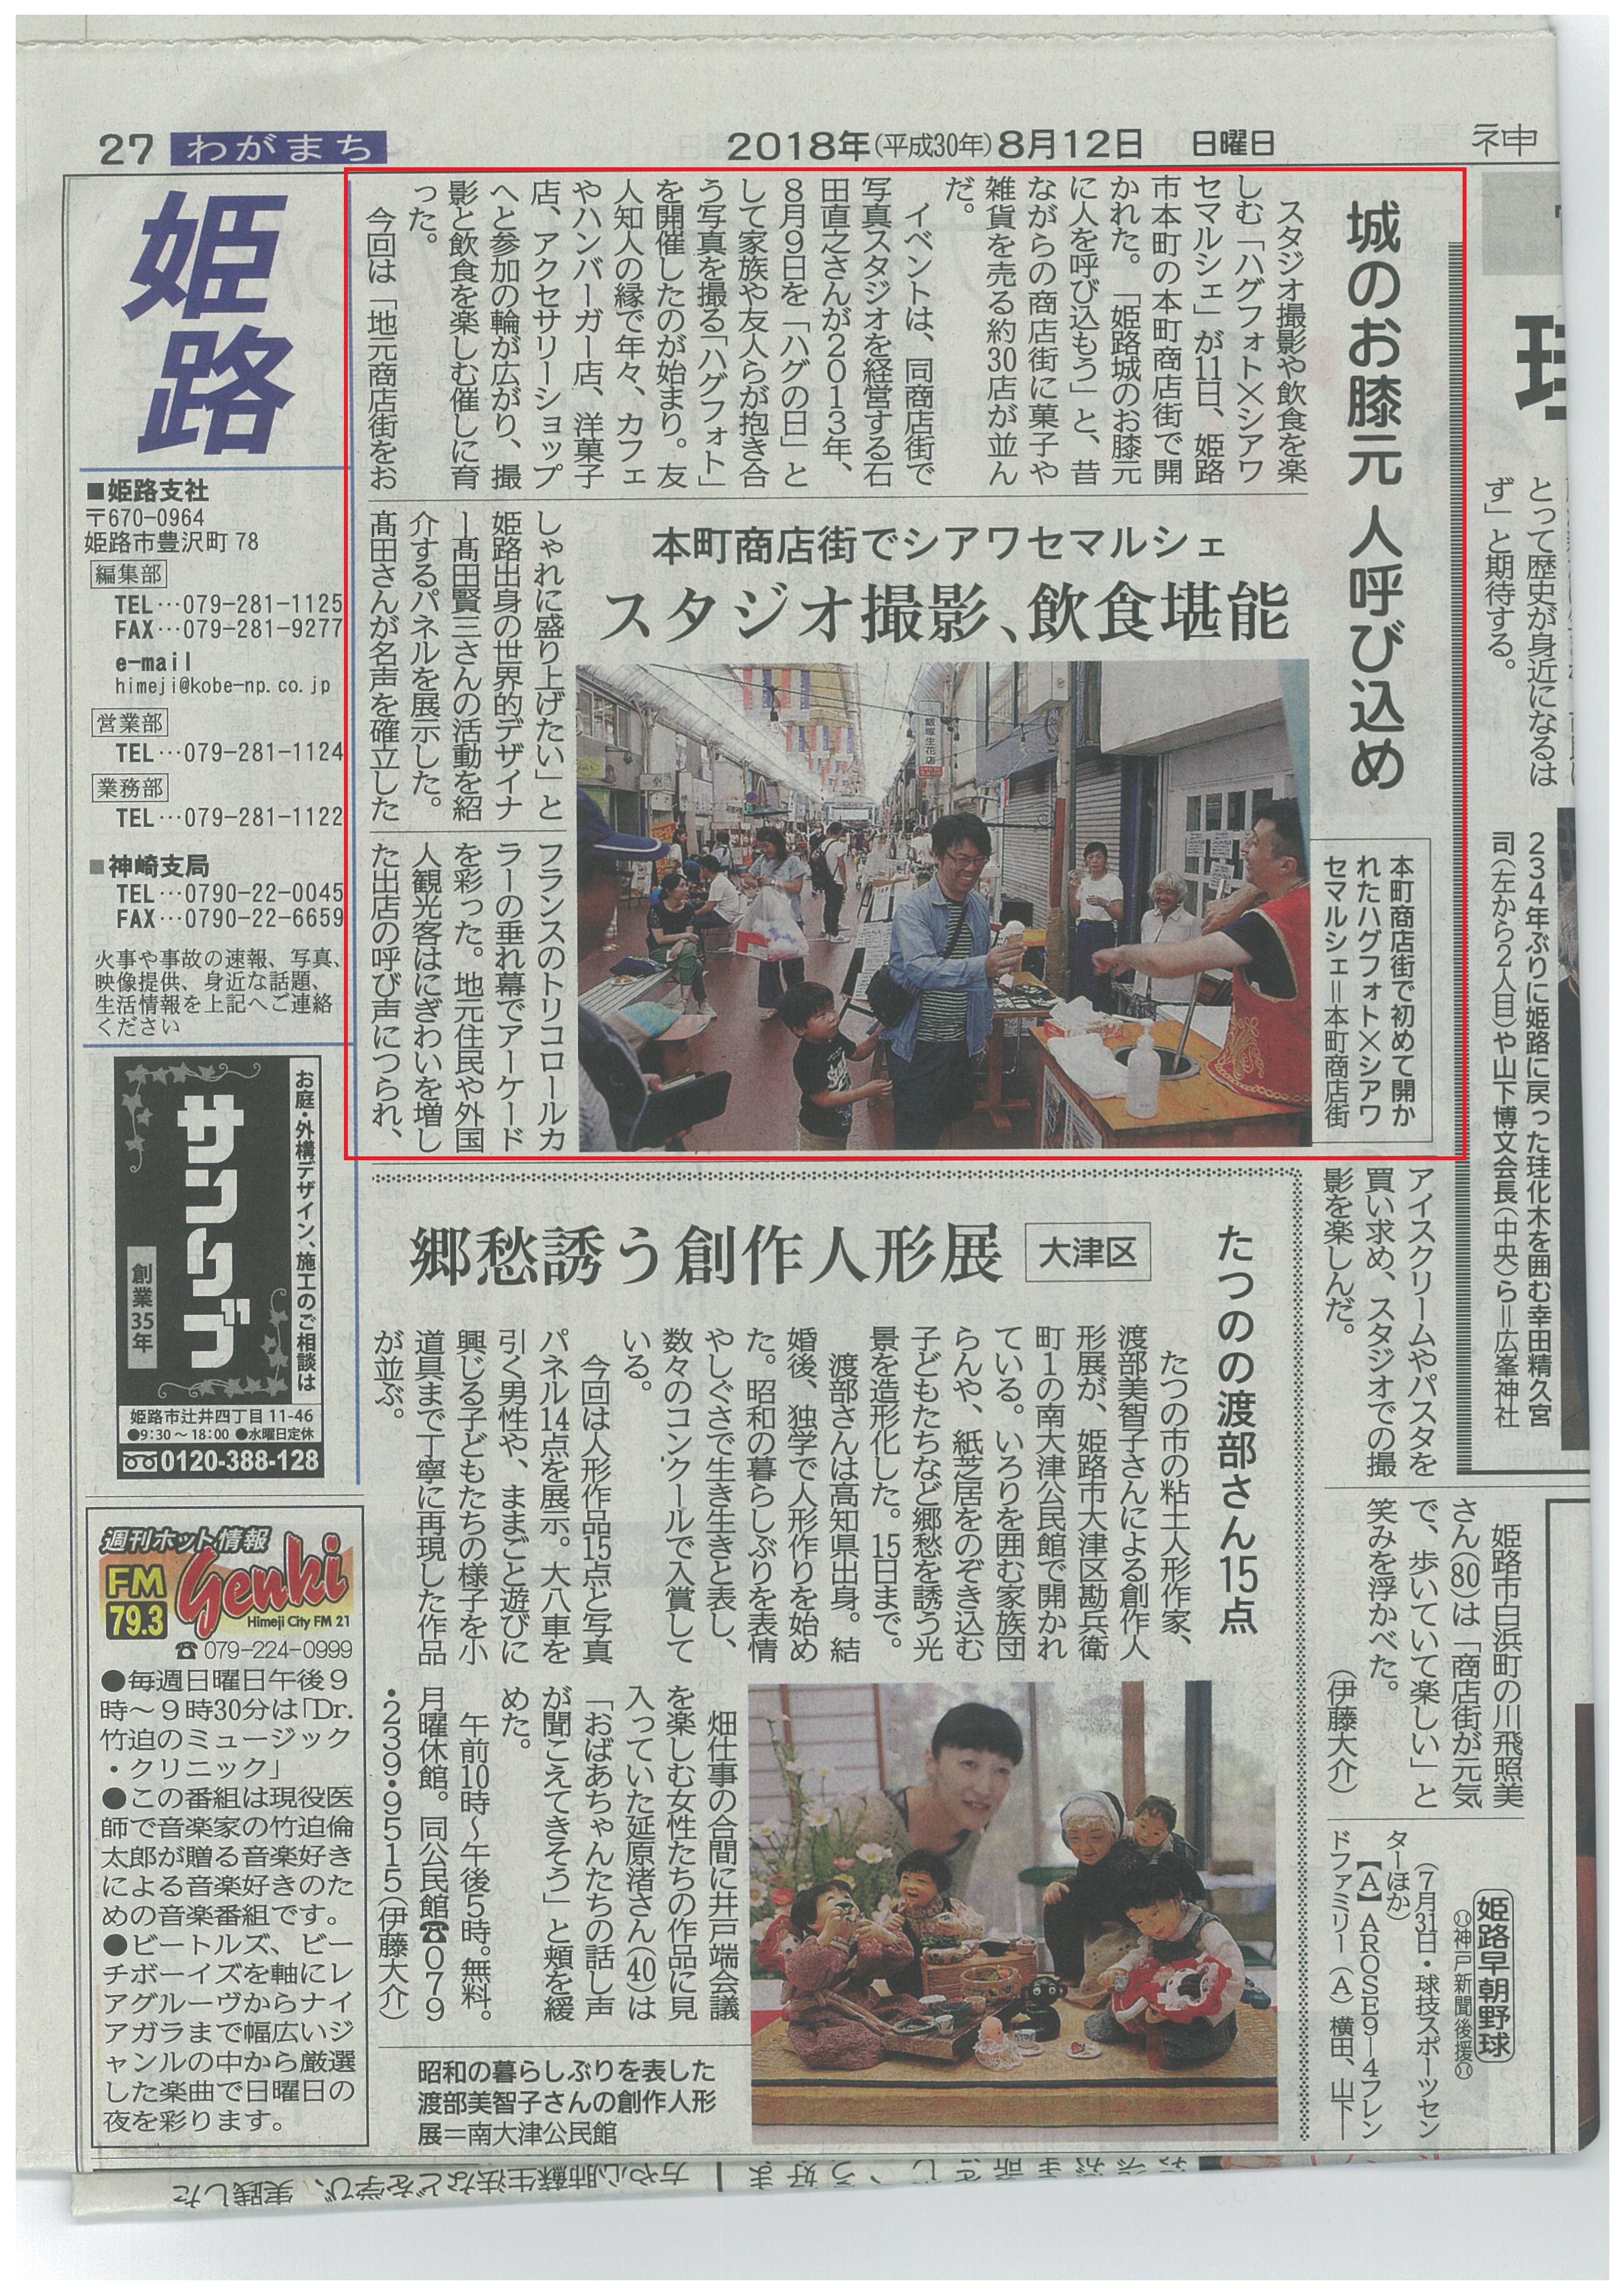 HUGPHOTOXシアワセマルシェin本町商店街　当日の様子が神戸新聞さまに取り上げて頂きました！